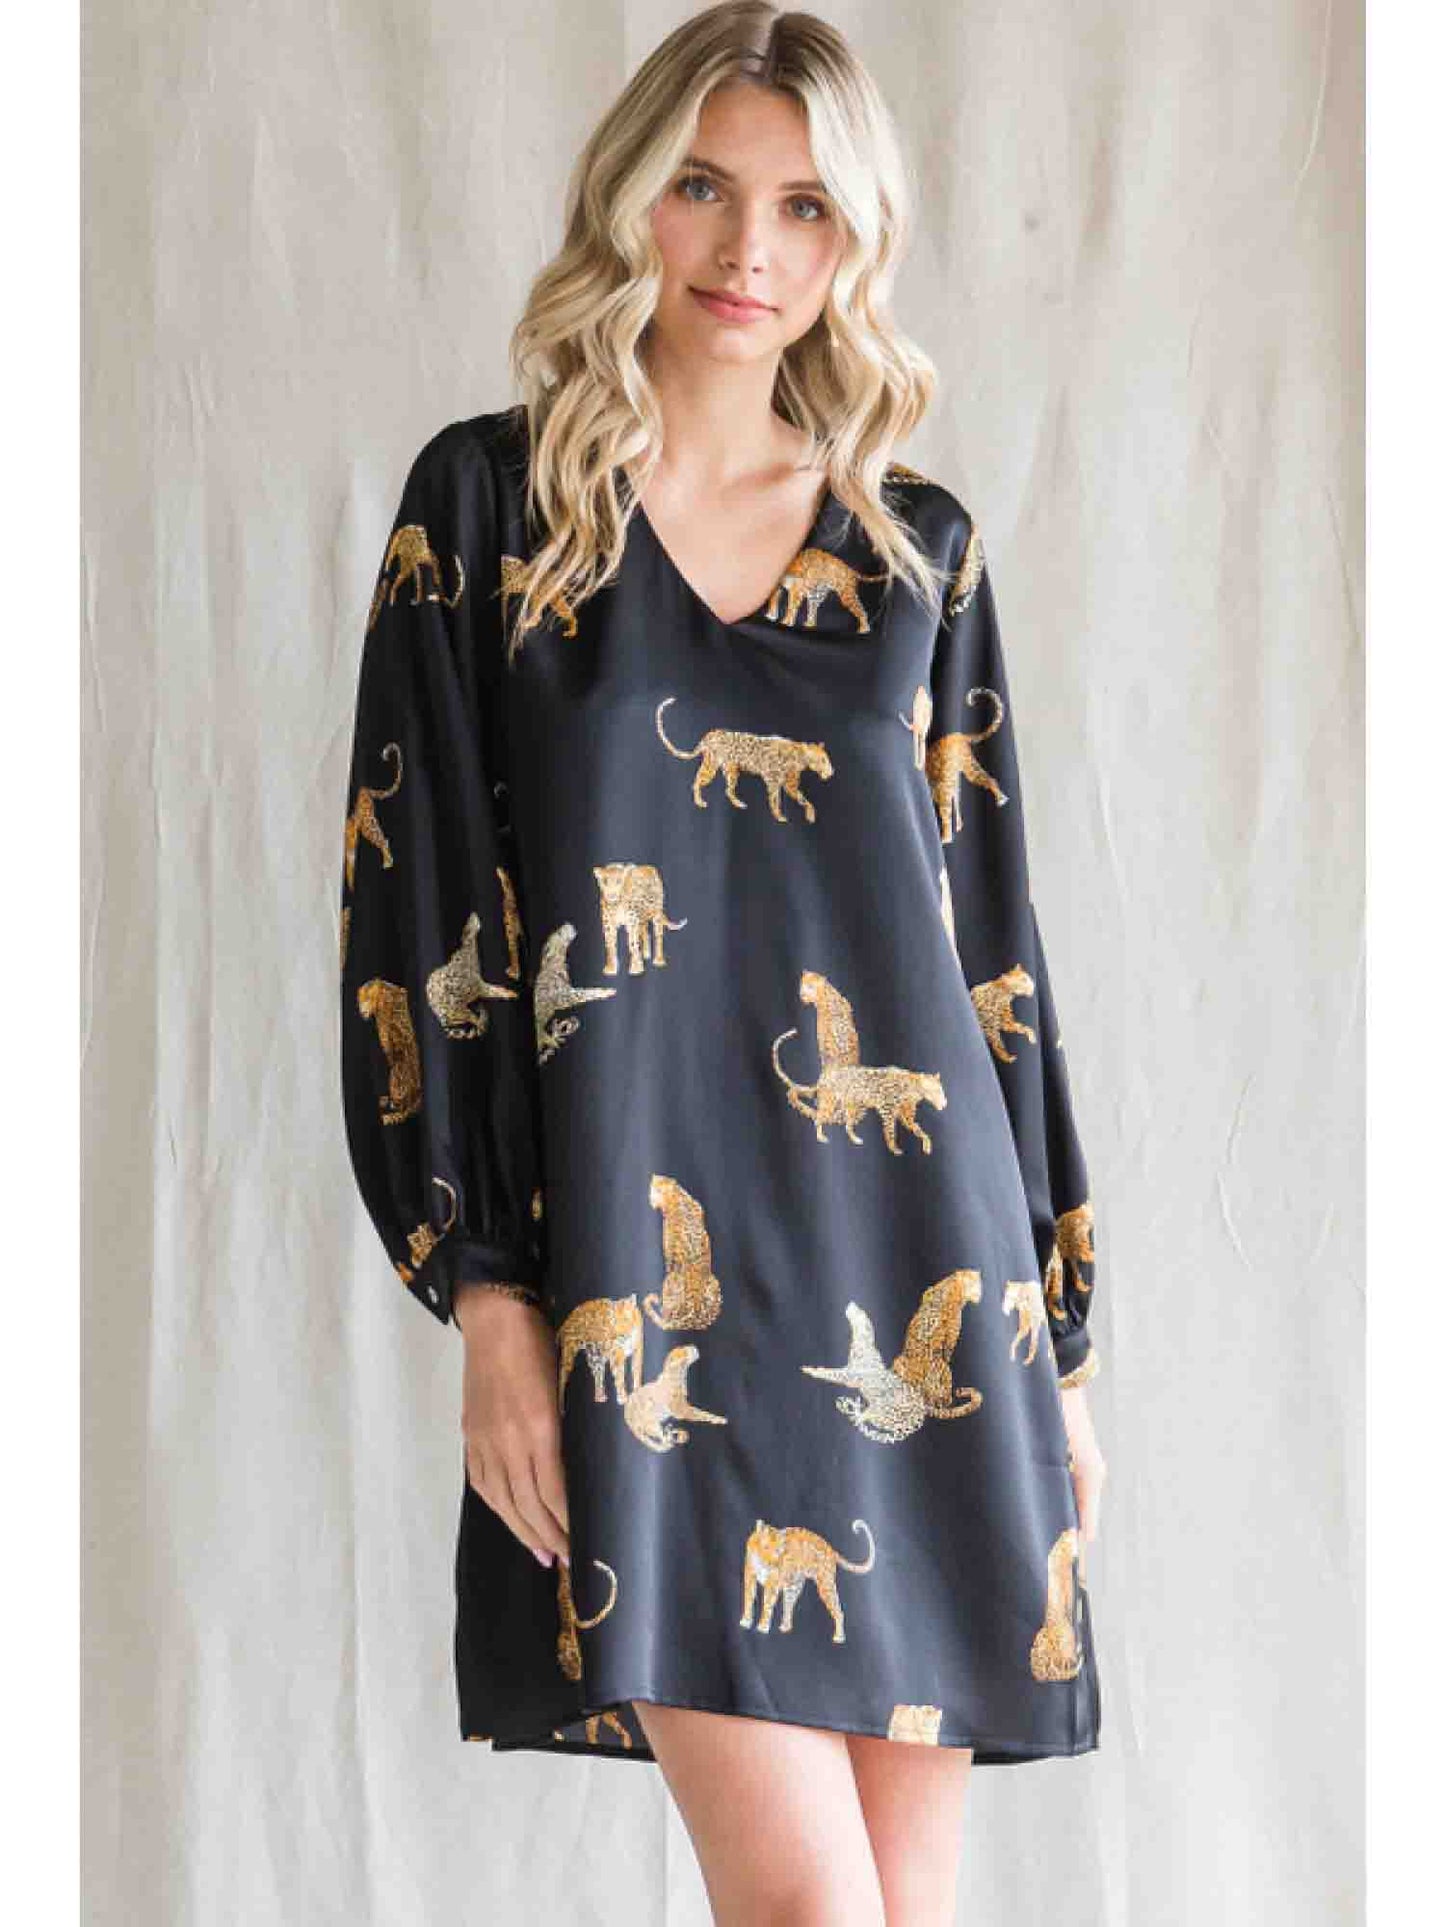 Cheetah Animal Print LSL Dress in Black by Jodifl